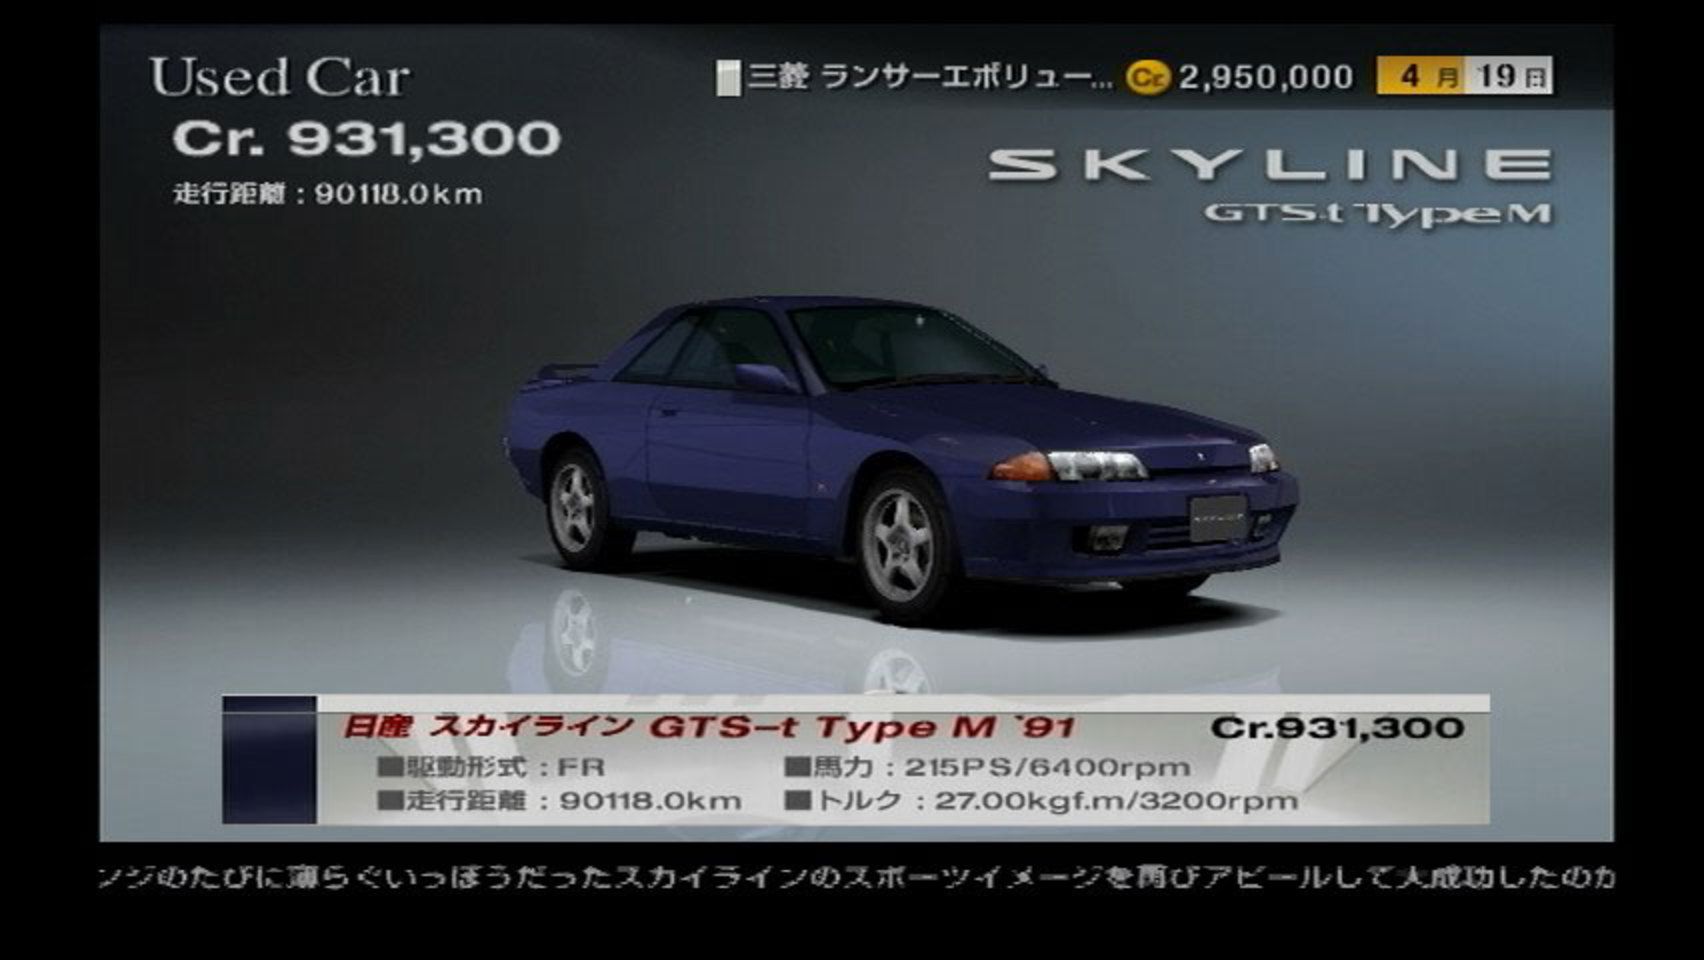 Nissan SKYLINE GTS-t Type M